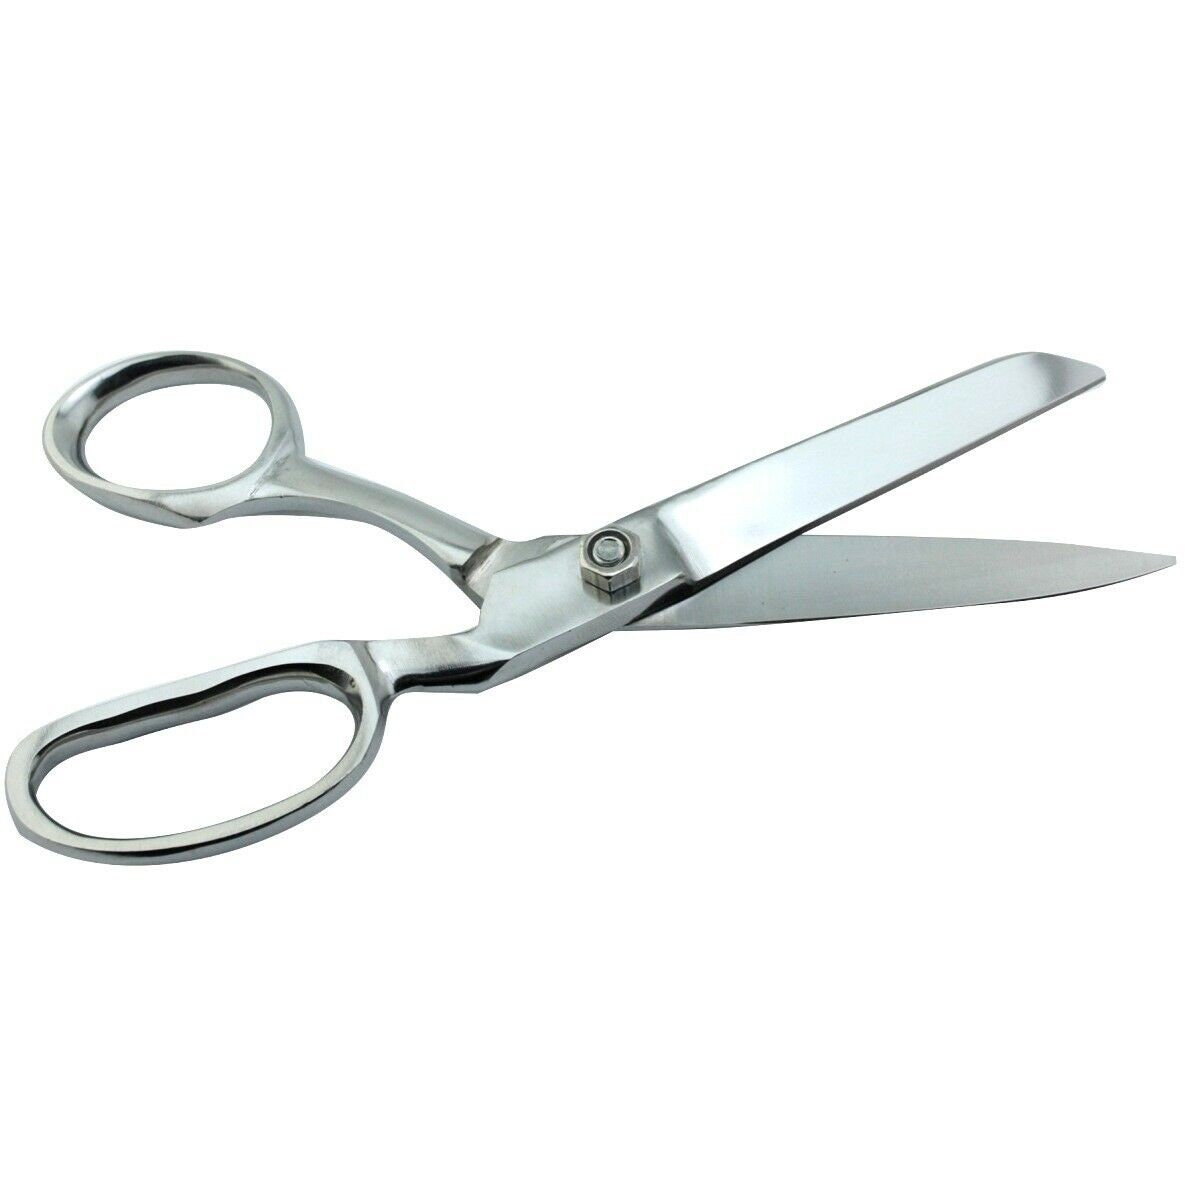 Small sharp scissors-Glexal 5 Inch Precision Scissors-2 pack,razor Sharp  Blade Shears for craft embroidery sewing school office cutting